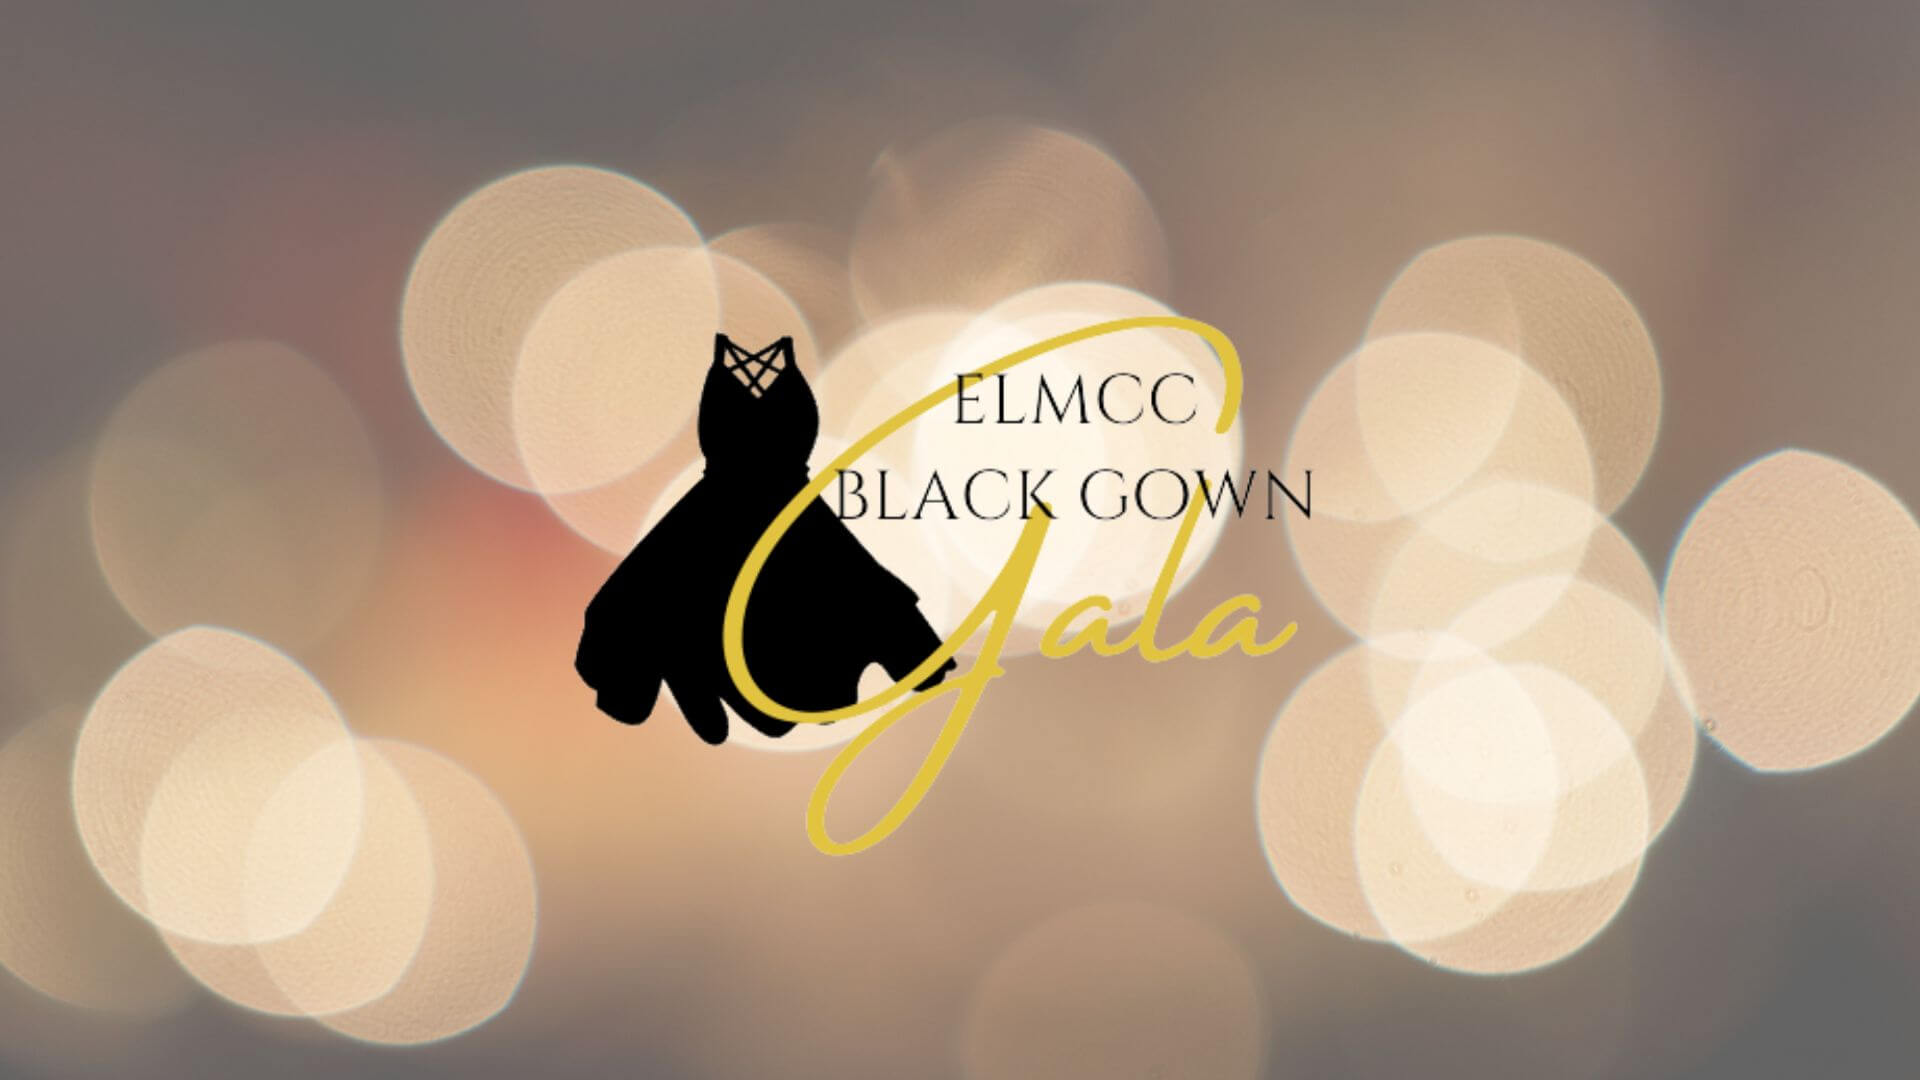 Black Gown Gala